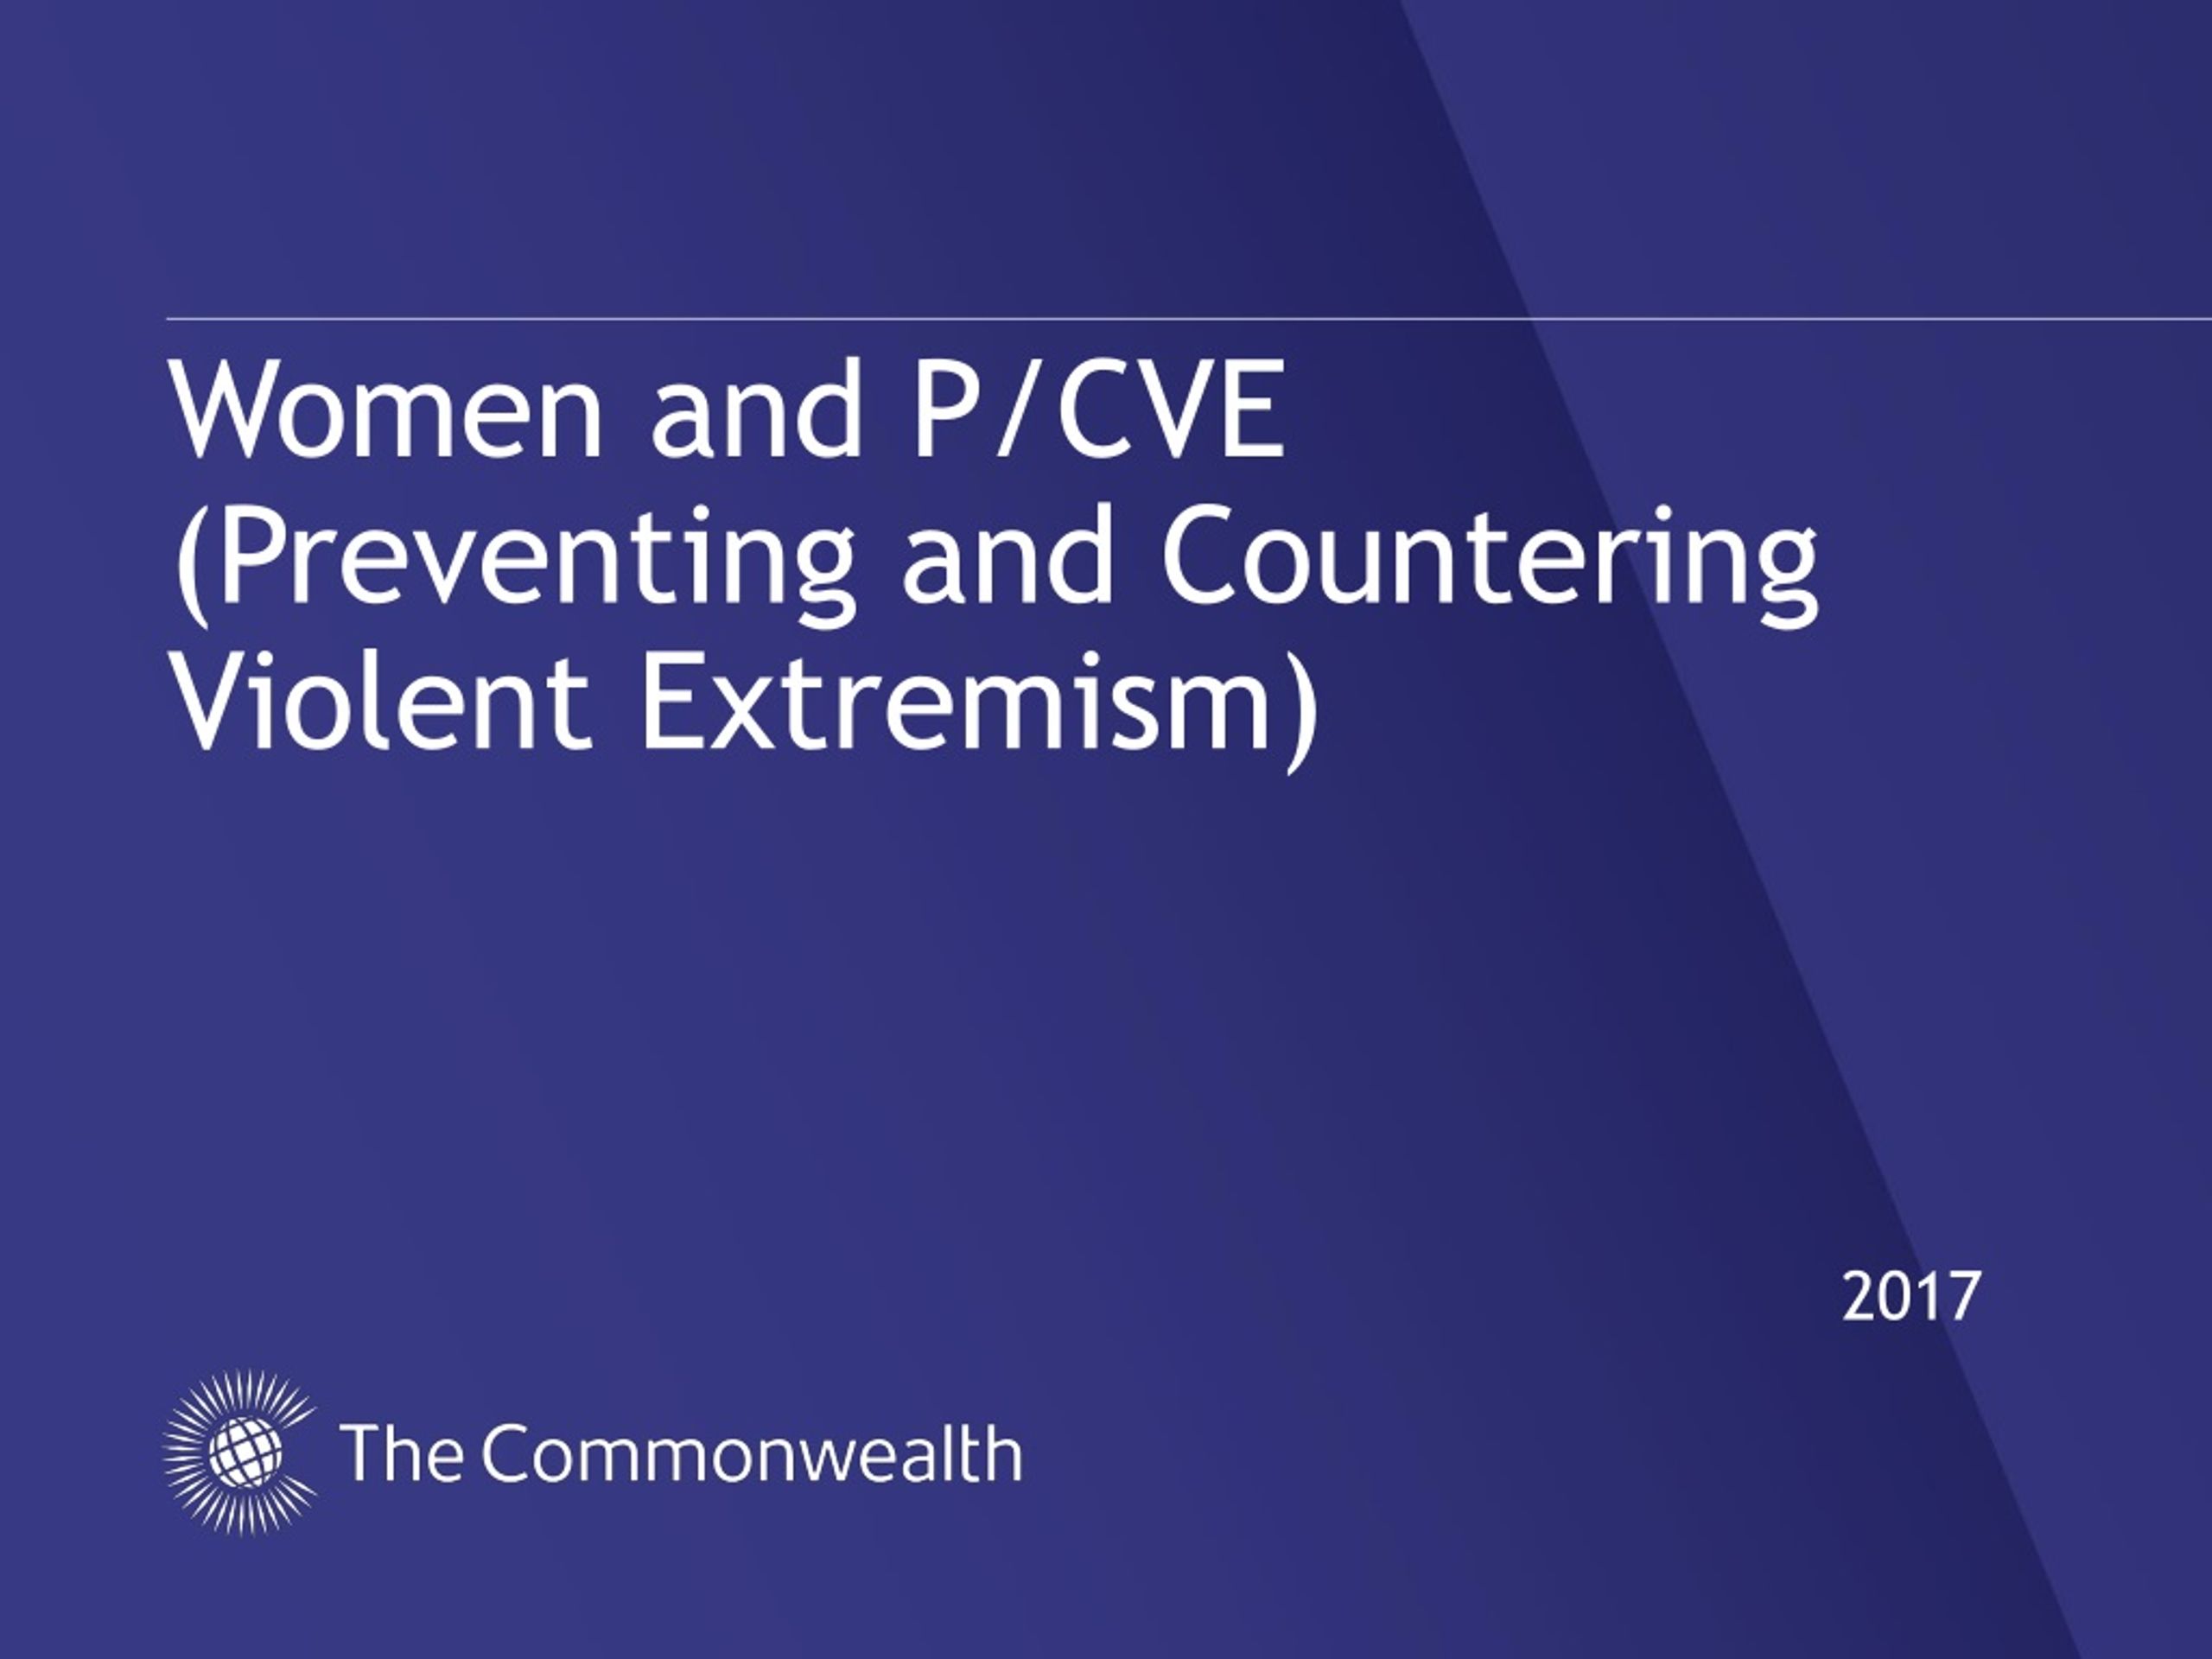 countering violent extremism (cve) literature review